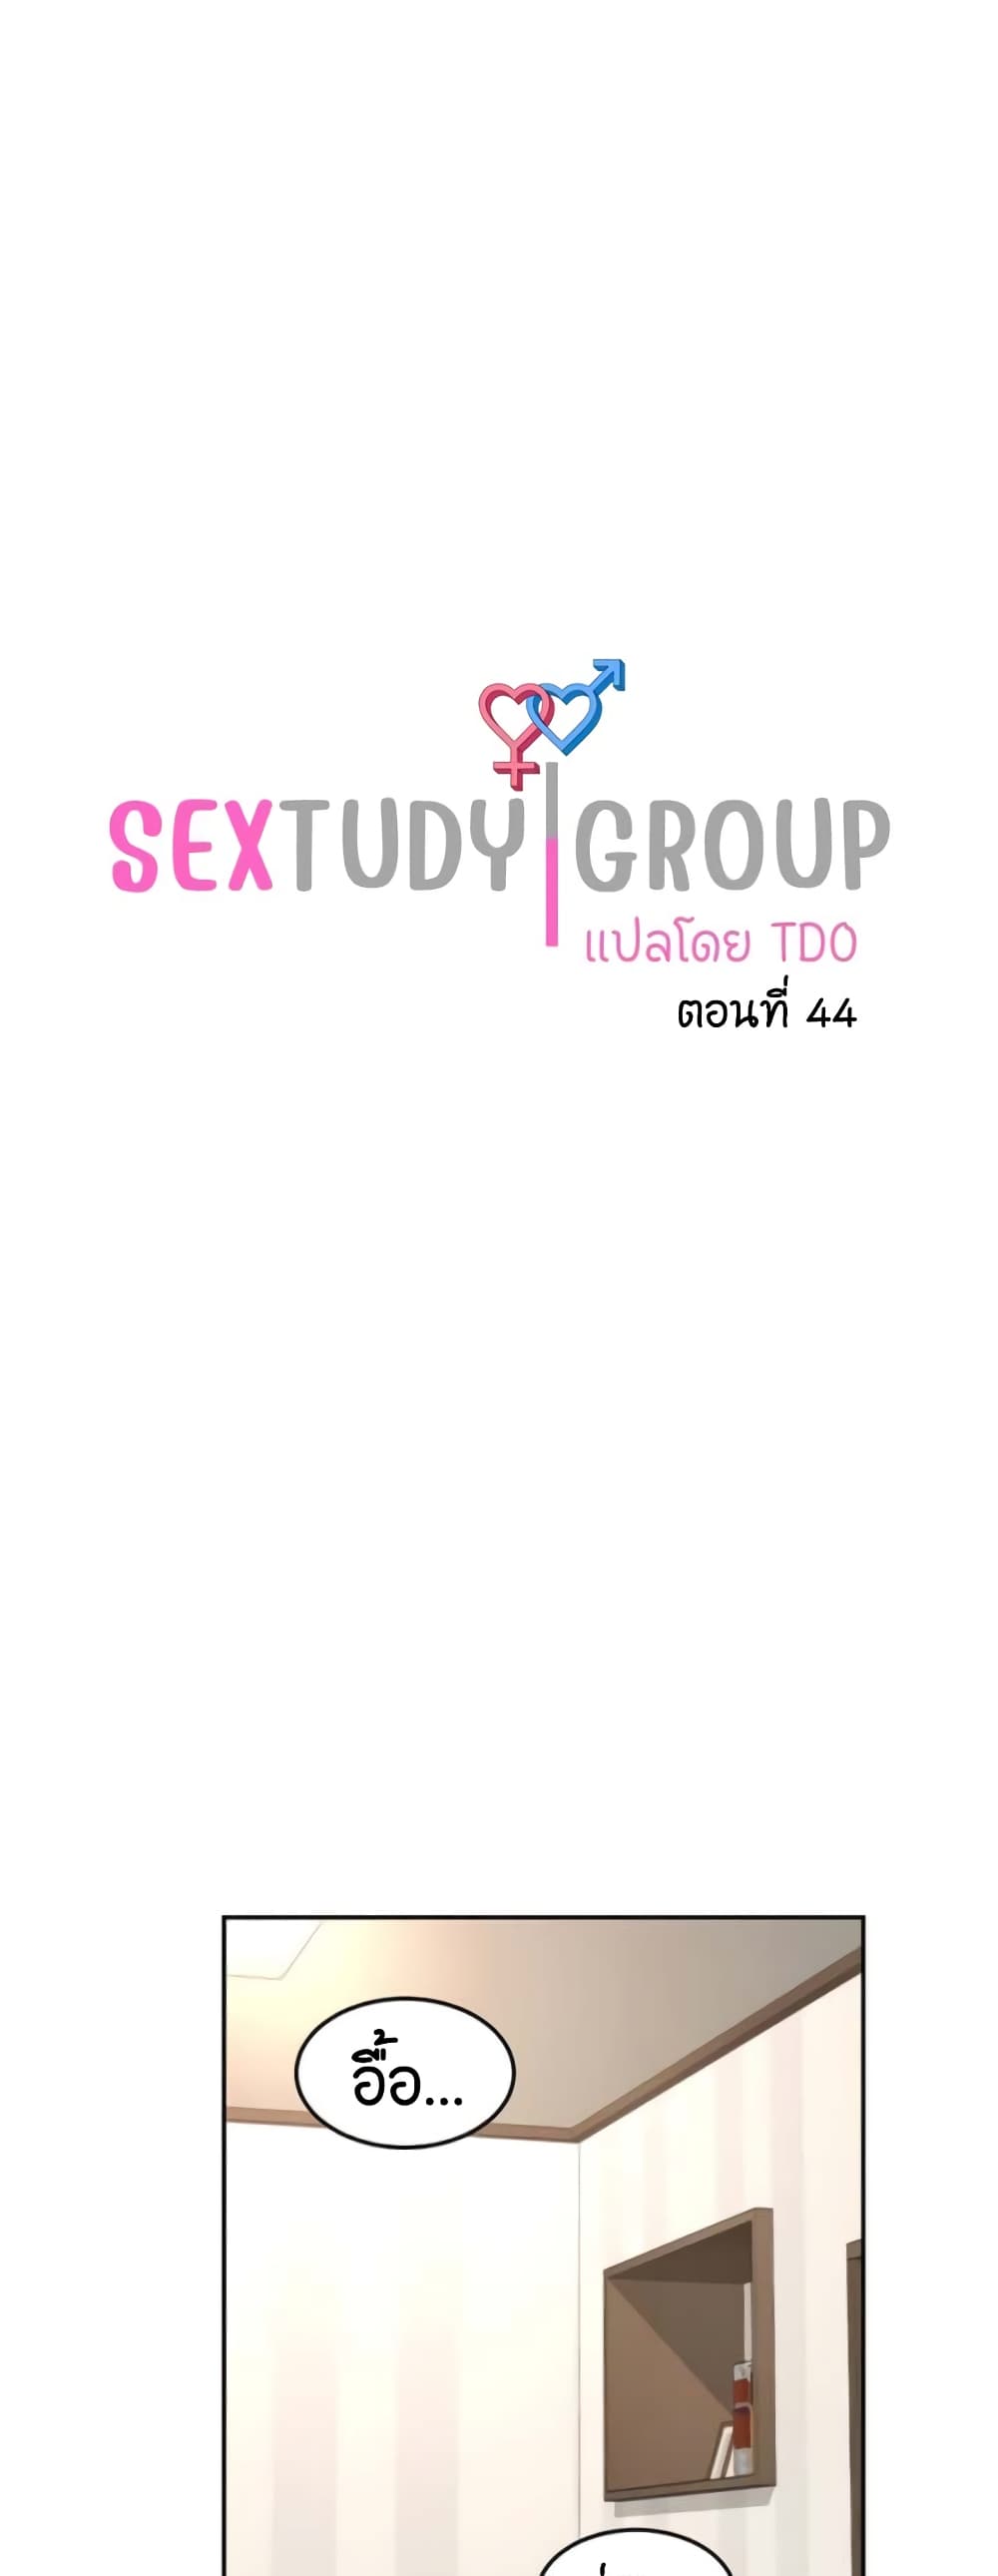 Sextudy Group 44 (1)